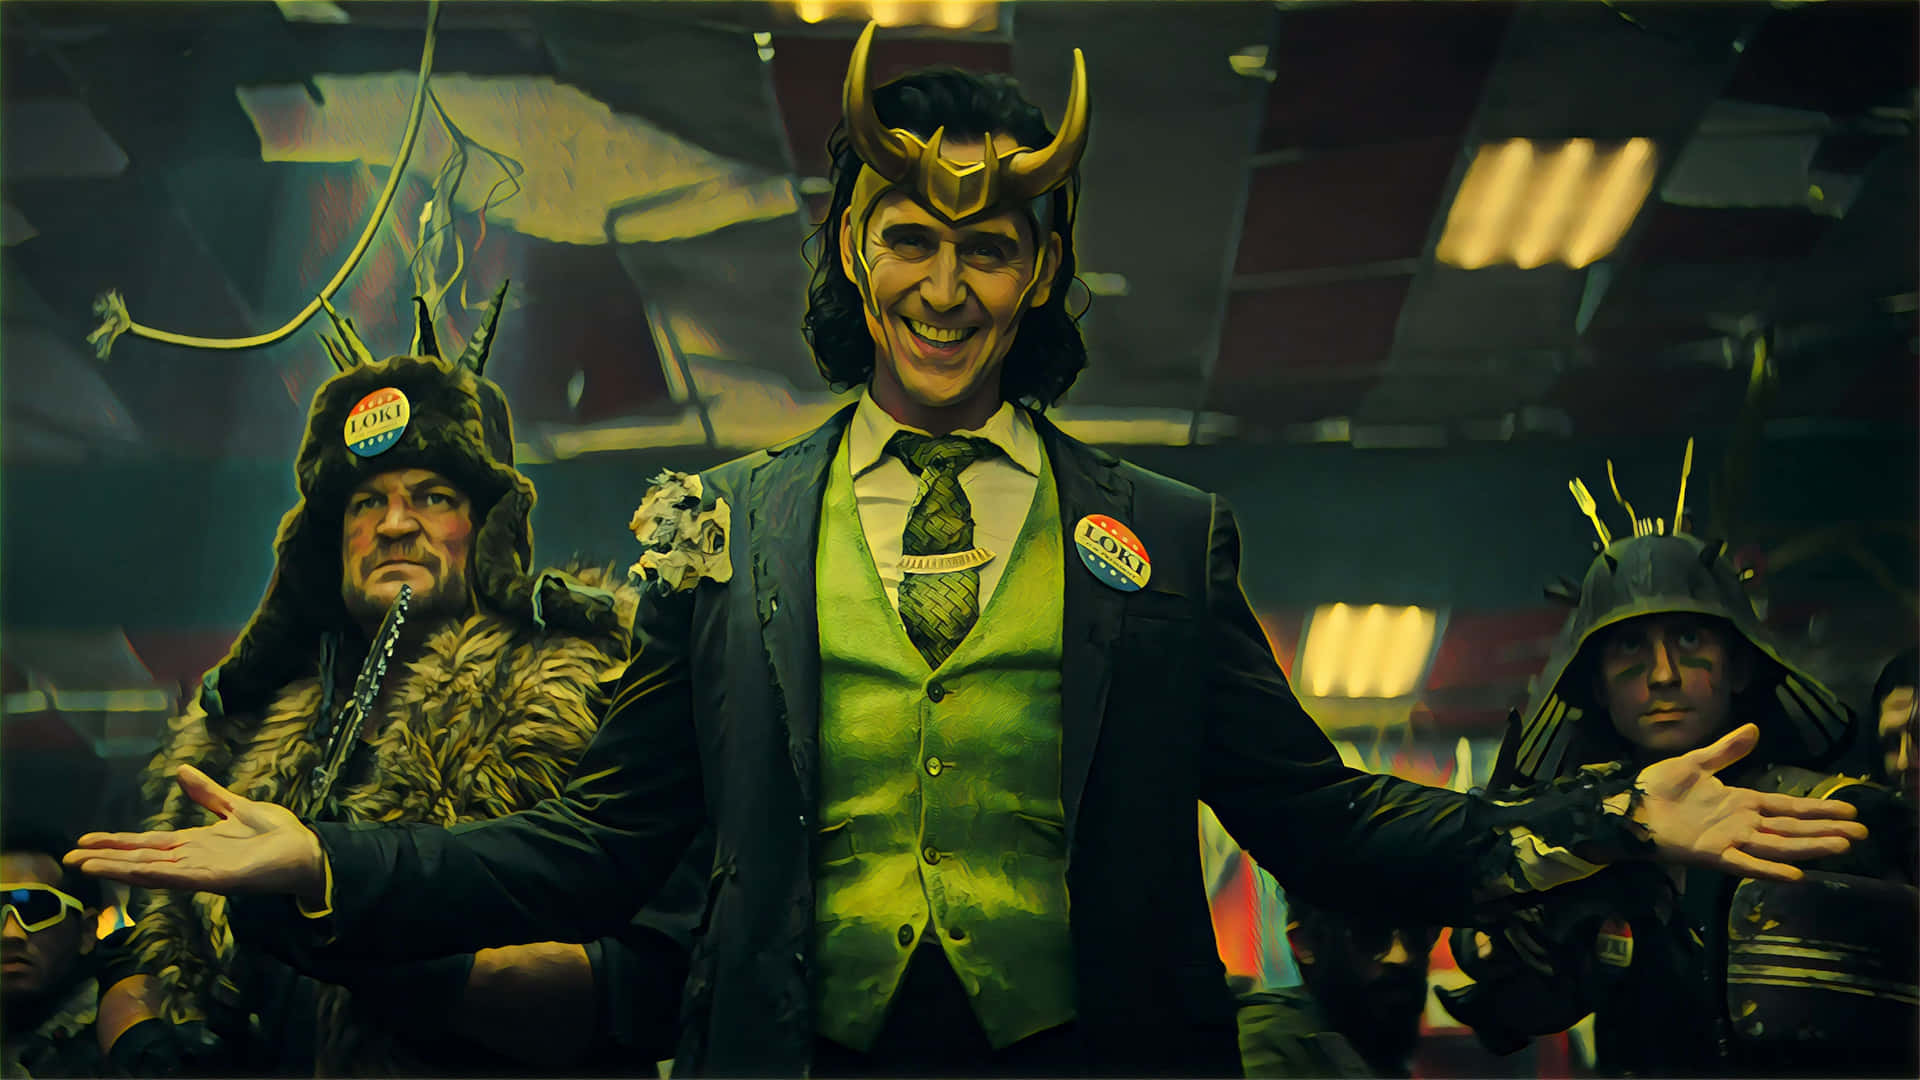 "Tom Hiddleston as Loki in the Marvel Cinematic Universe" Wallpaper